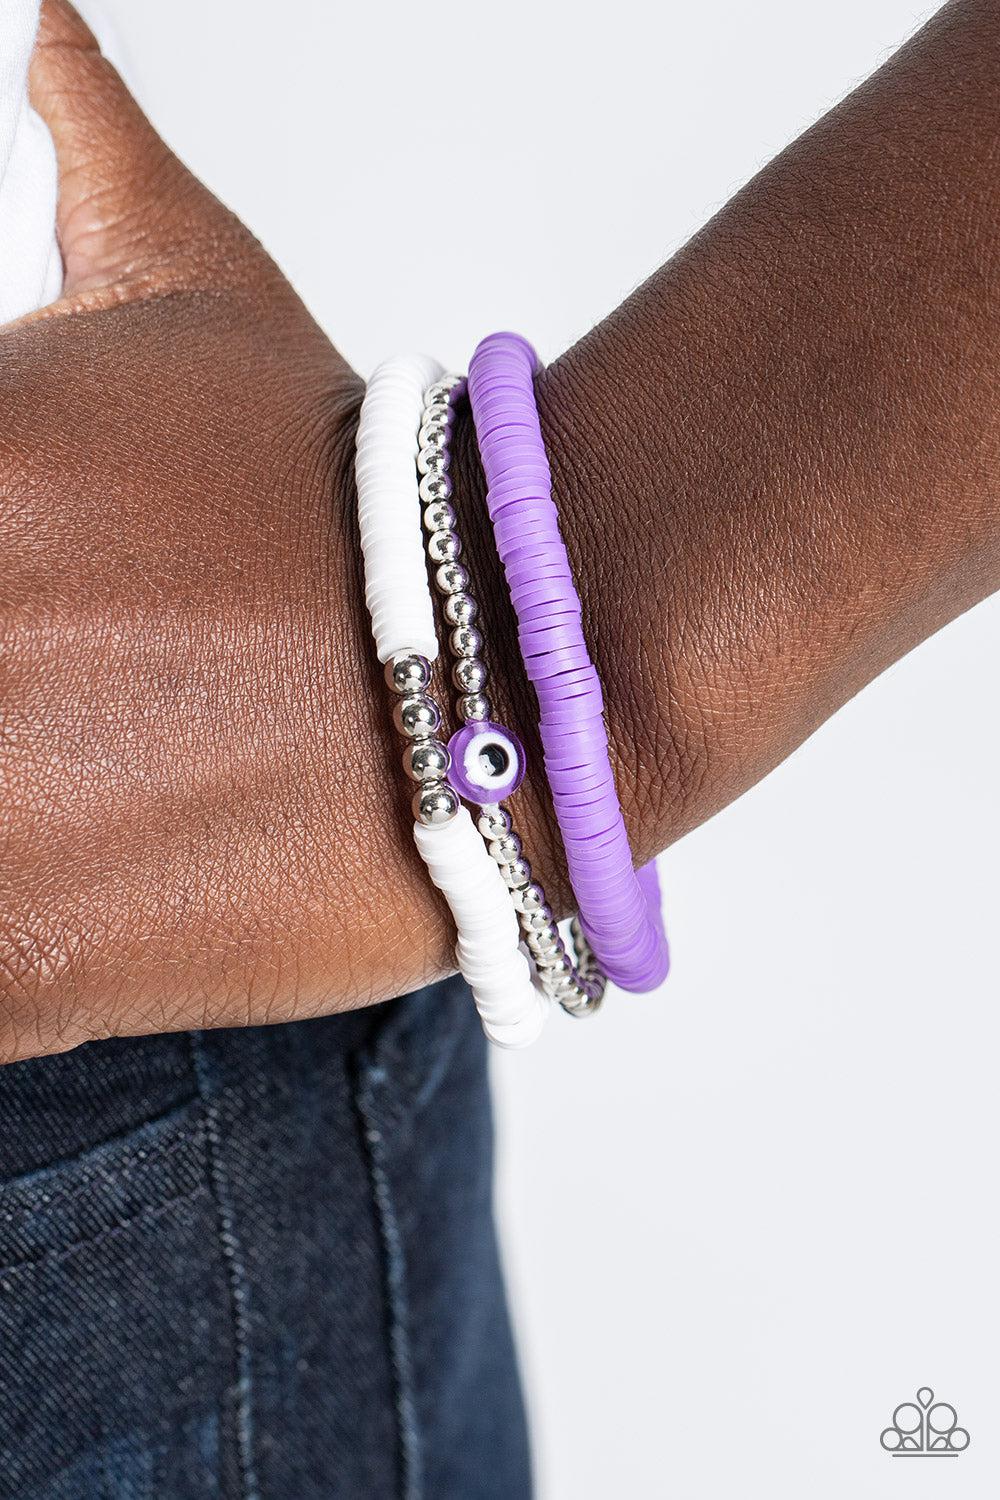 EYE Have A Dream Purple Bracelet - Paparazzi Accessories-on model - CarasShop.com - $5 Jewelry by Cara Jewels